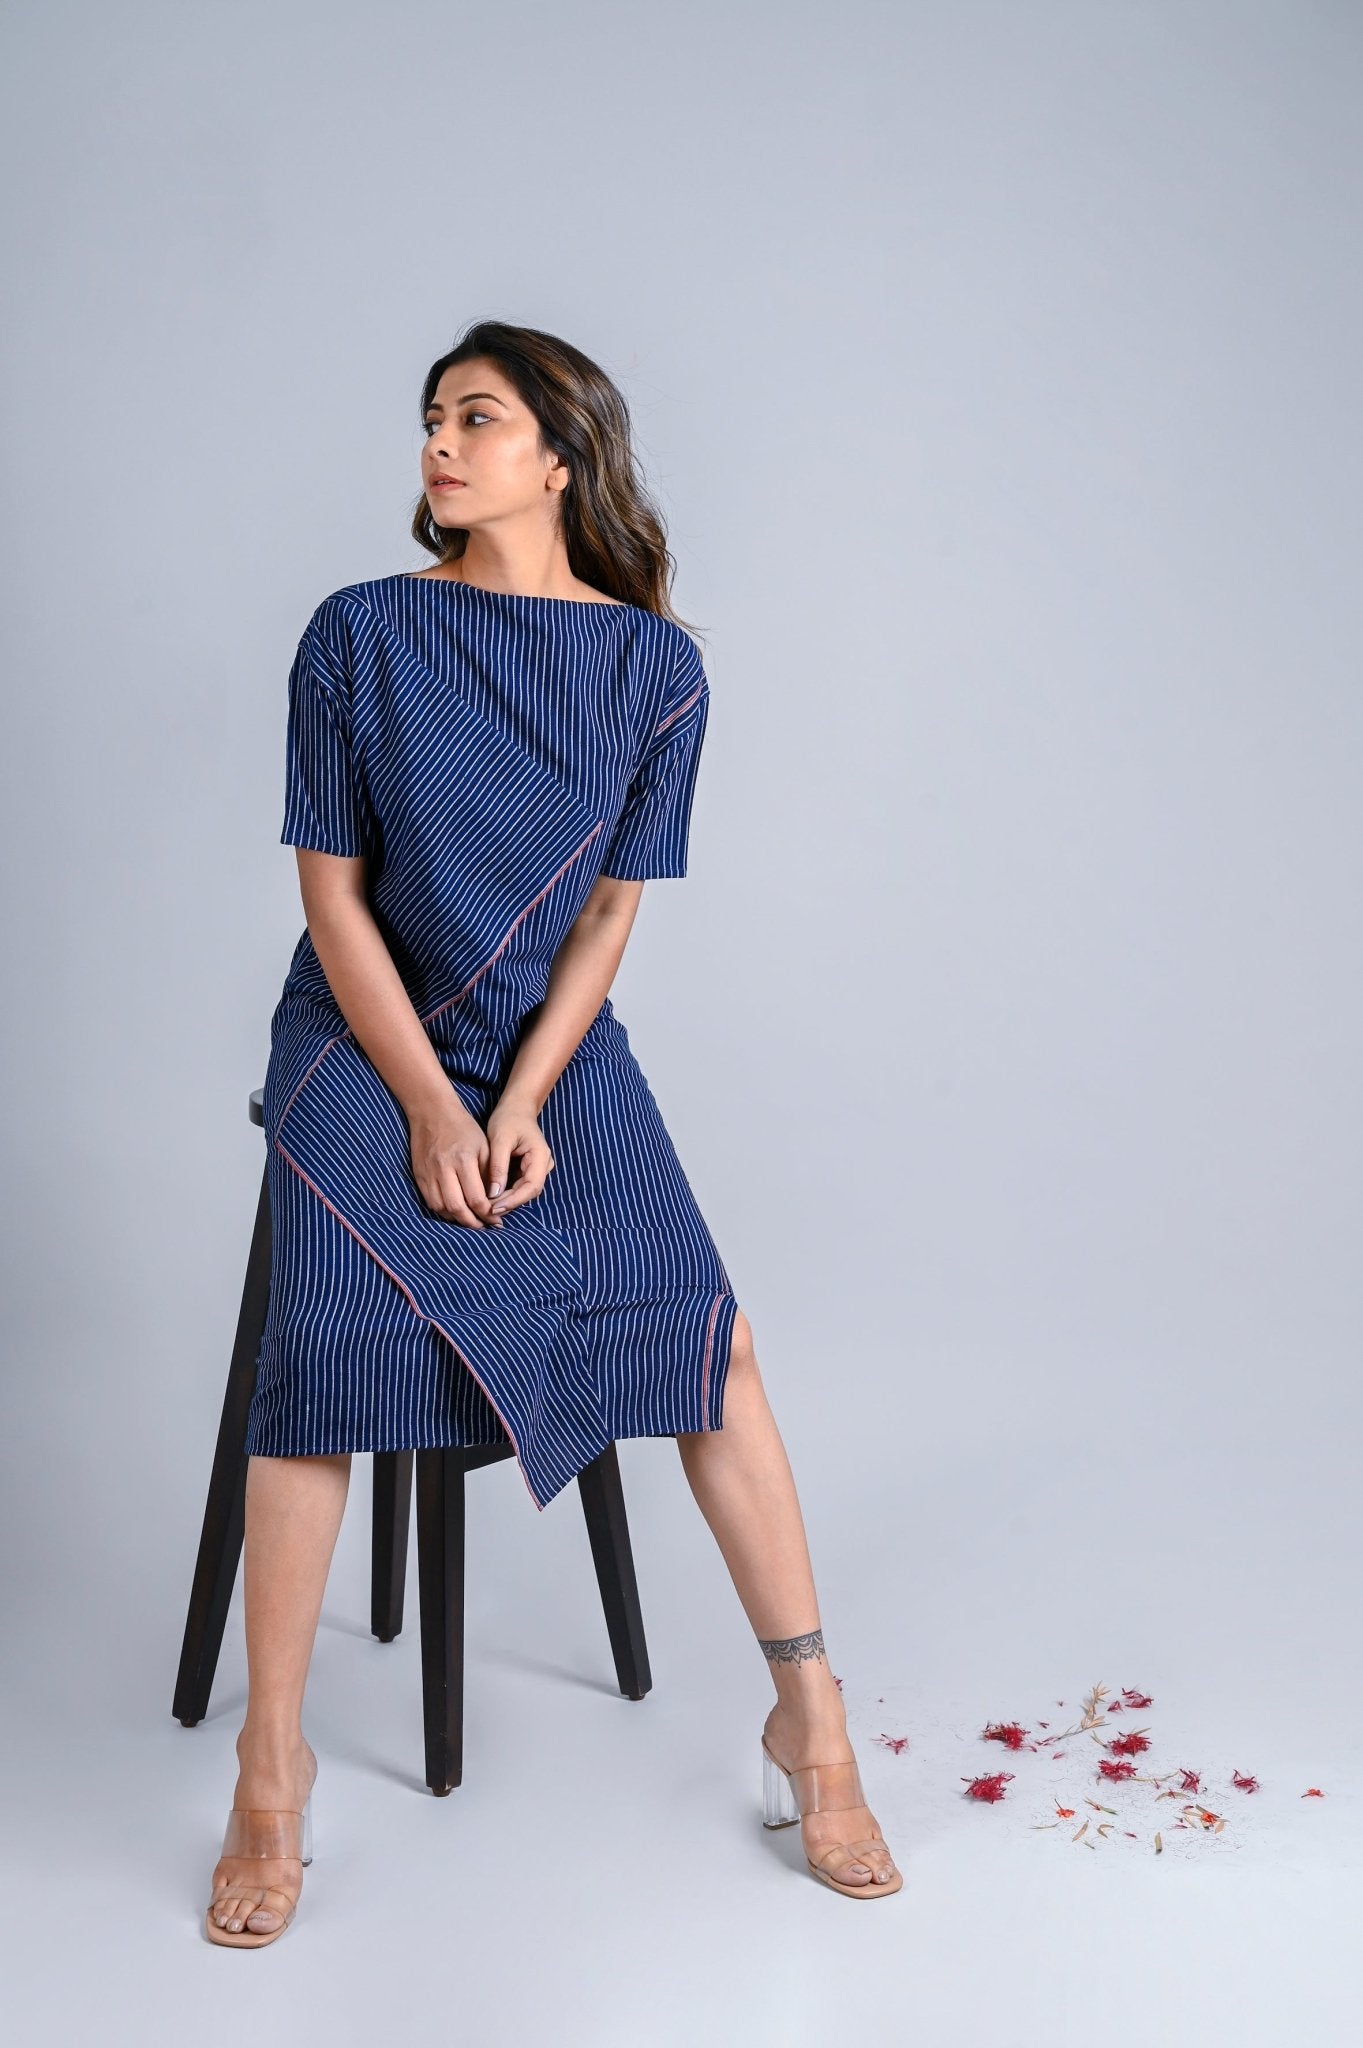 Folded Dress Diagonal Detail - Zero Waste - CiceroniDressesRang by Rajvi